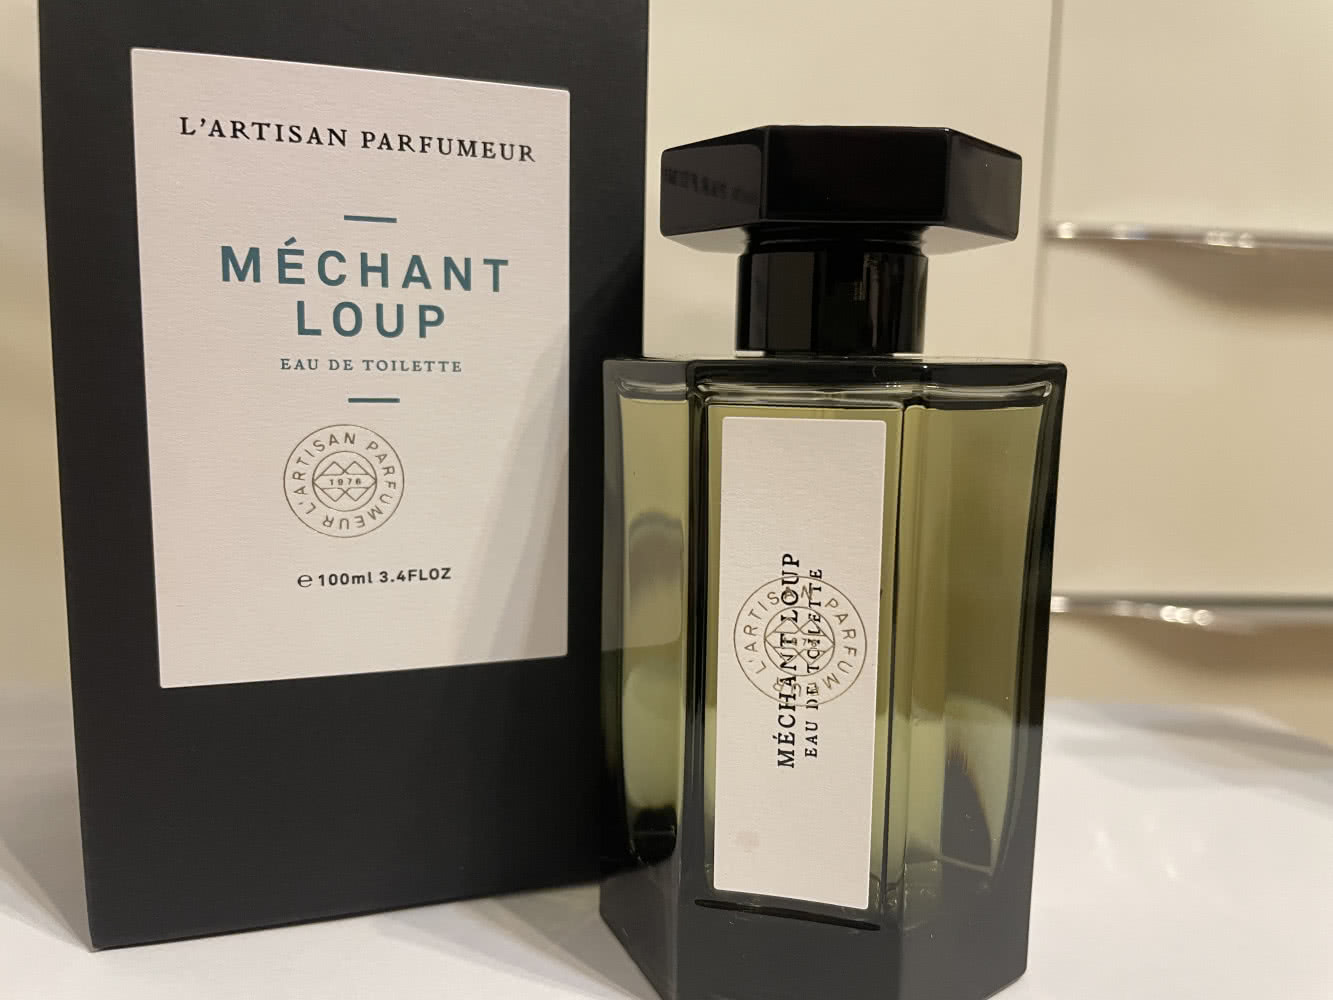 Méchant Loup, L'Artisan Parfumeur Делюсь 160 р/1 мл